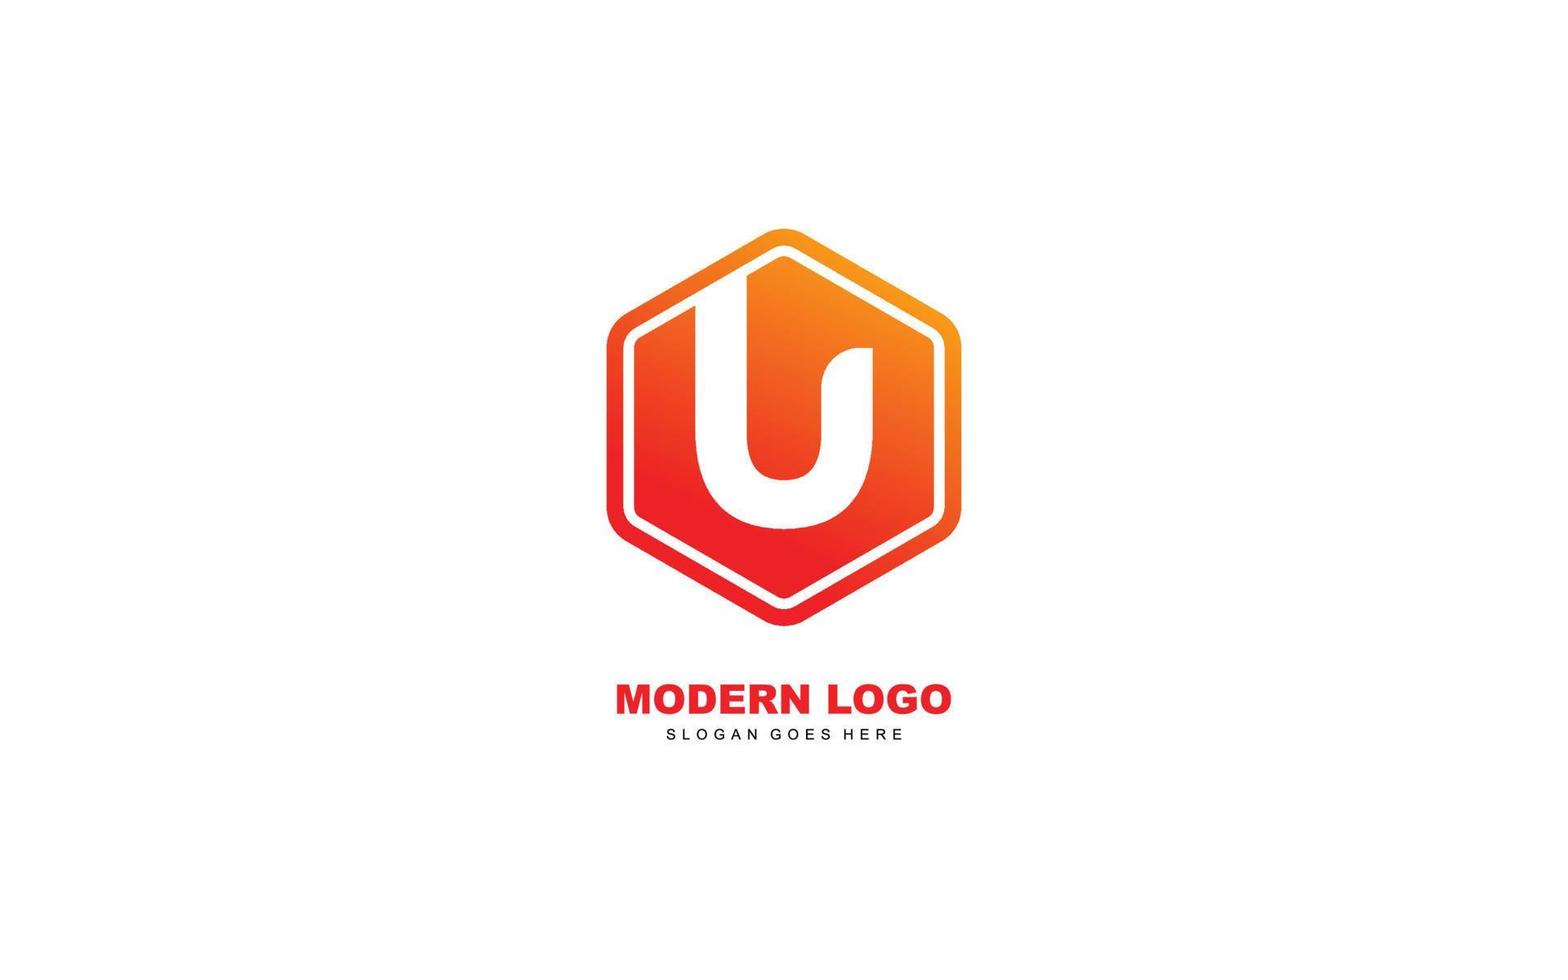 U logo shape for identity. letter template vector illustration for your brand.